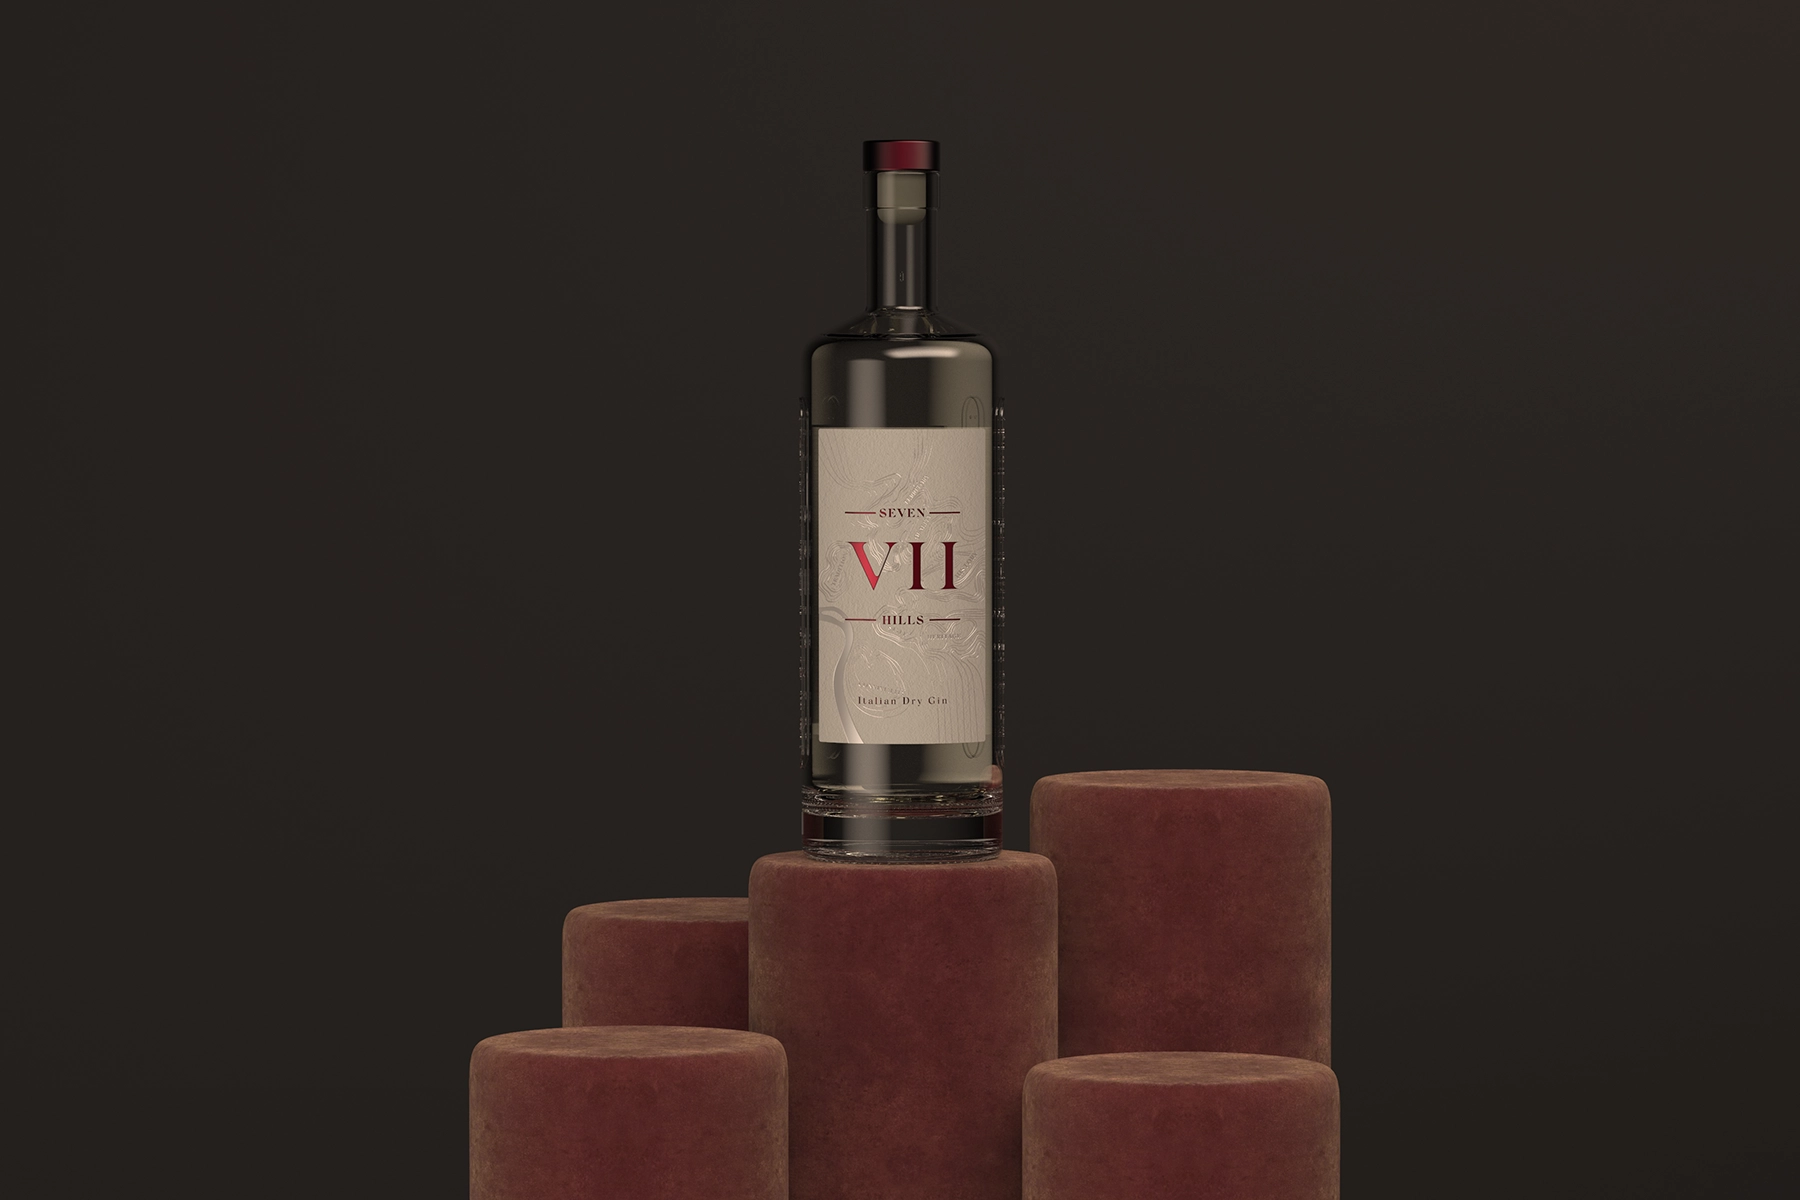 VII Hills Italian Dry Gin